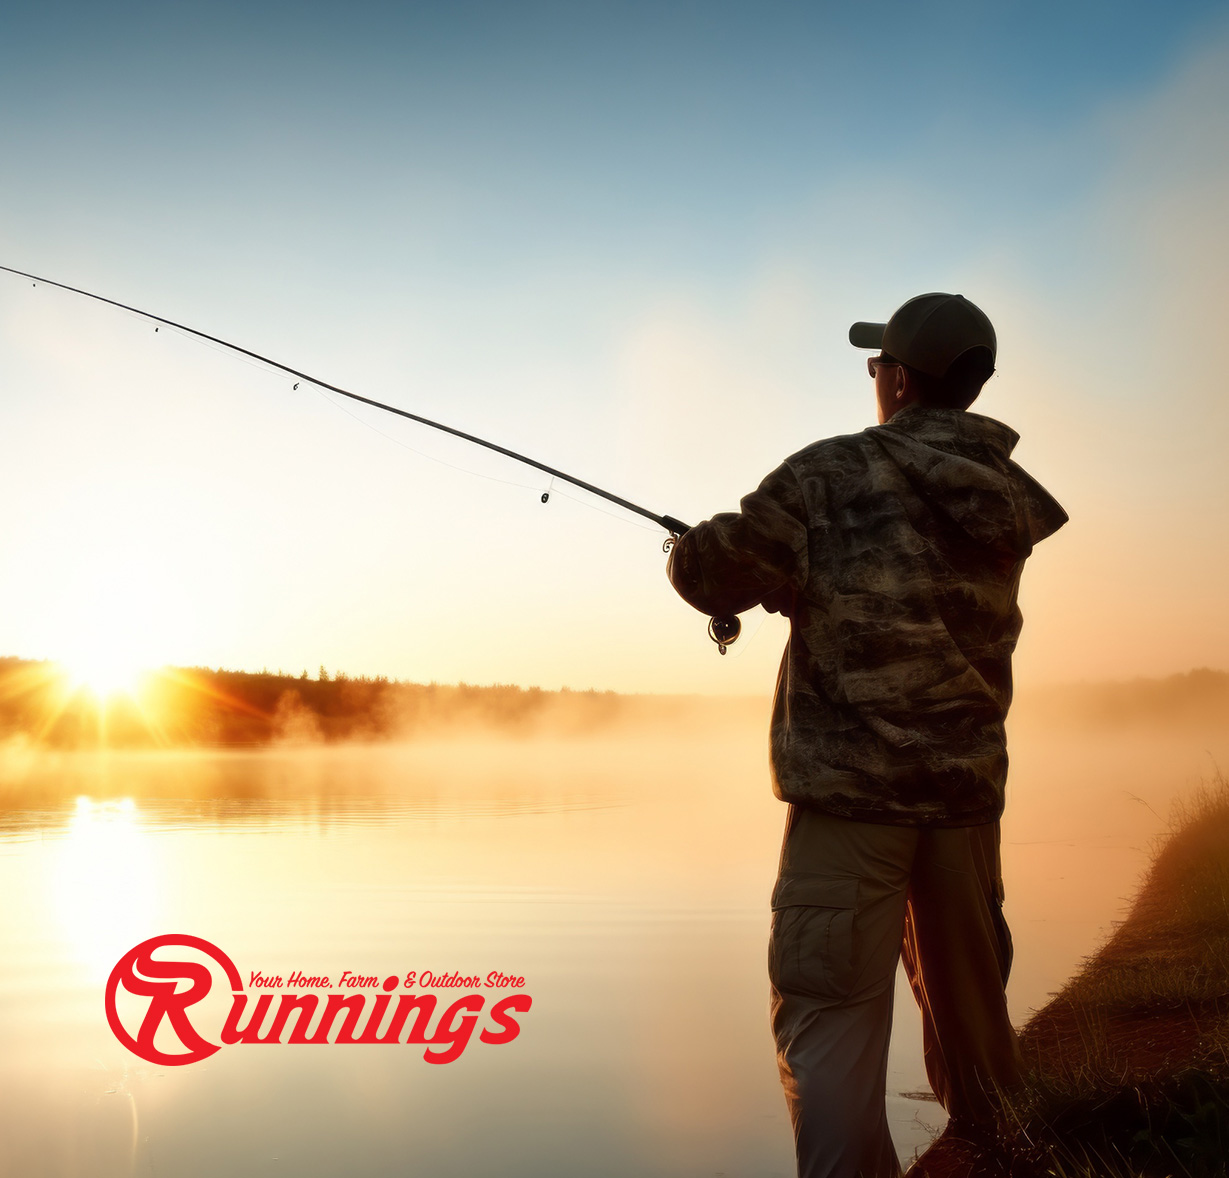 Runnings logo against photo of man fishing